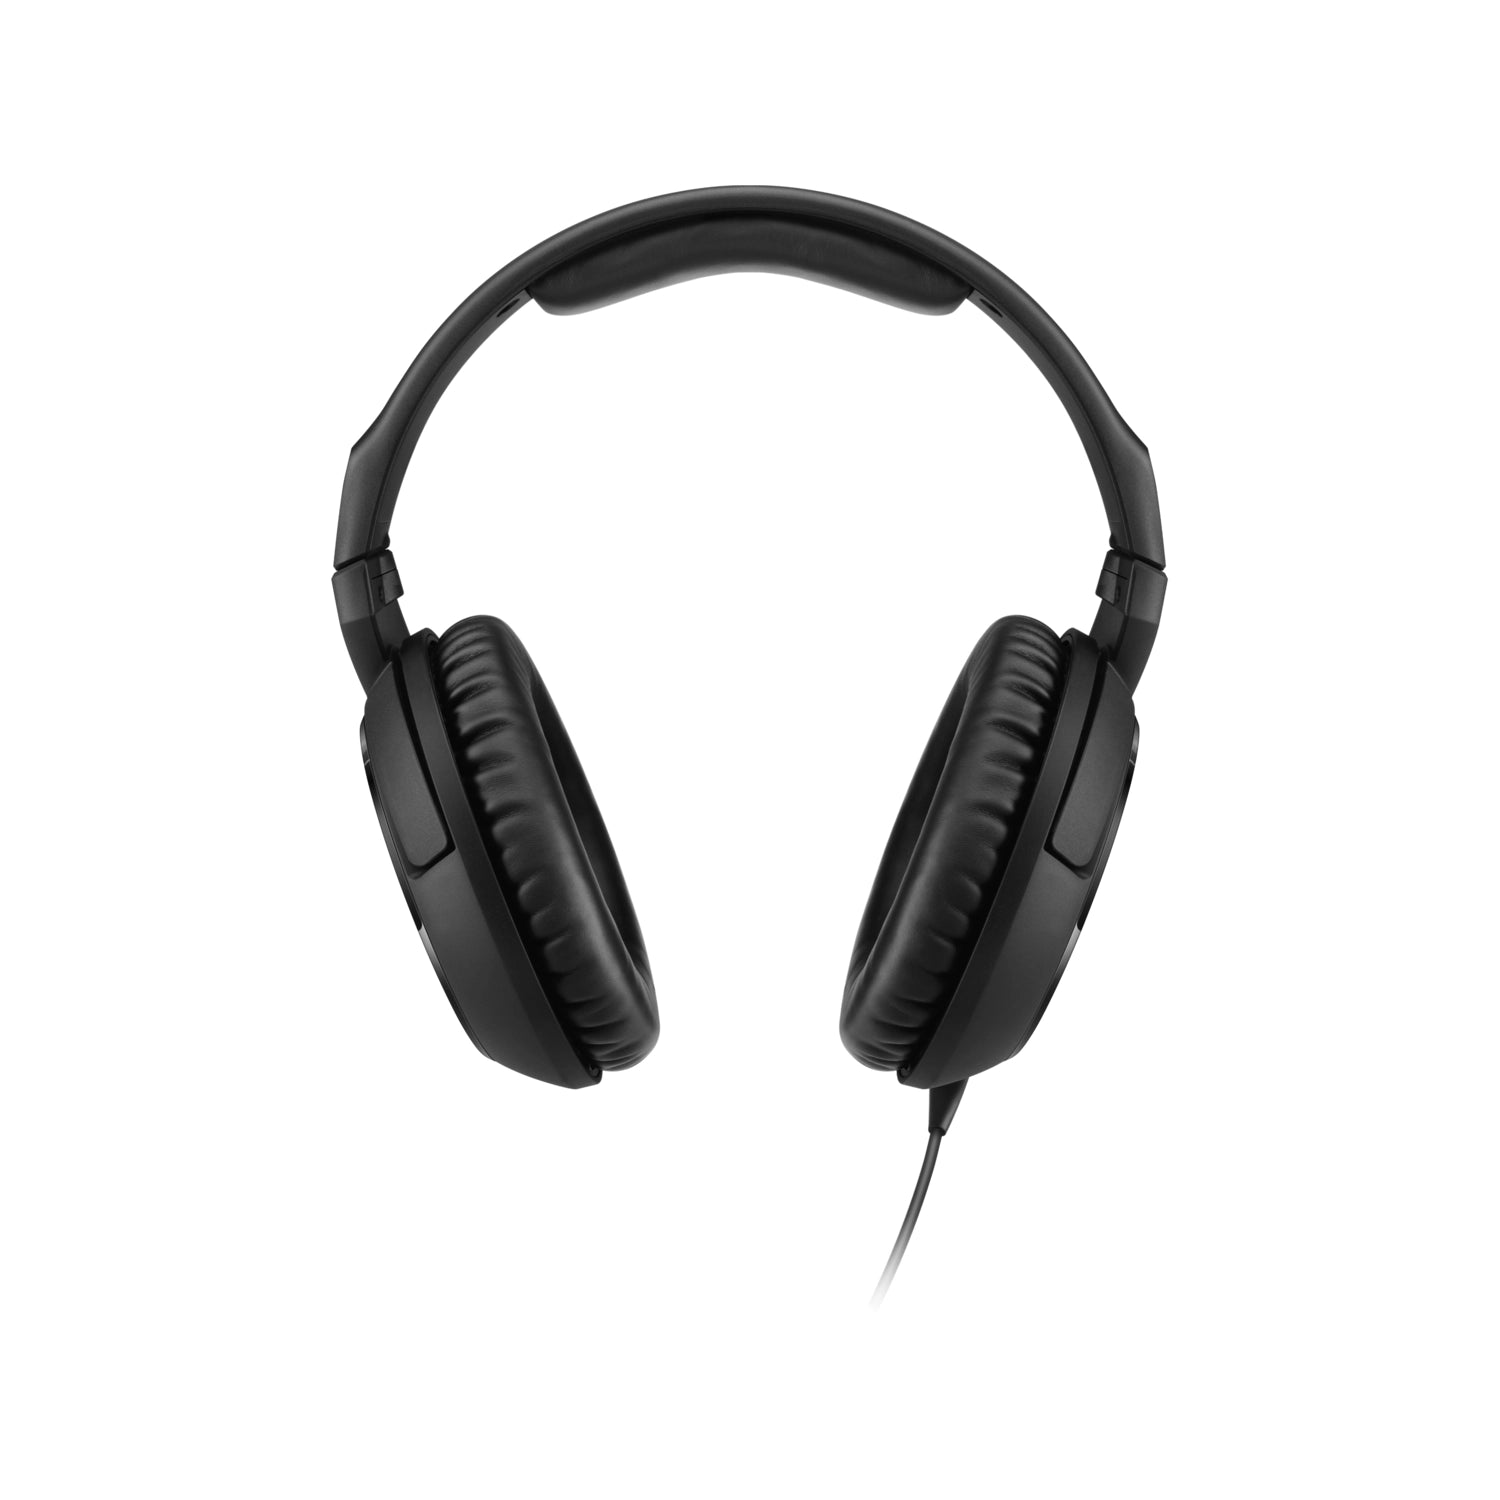 Sennheiser HD 200 PRO Closed-back Monitoring Headphones